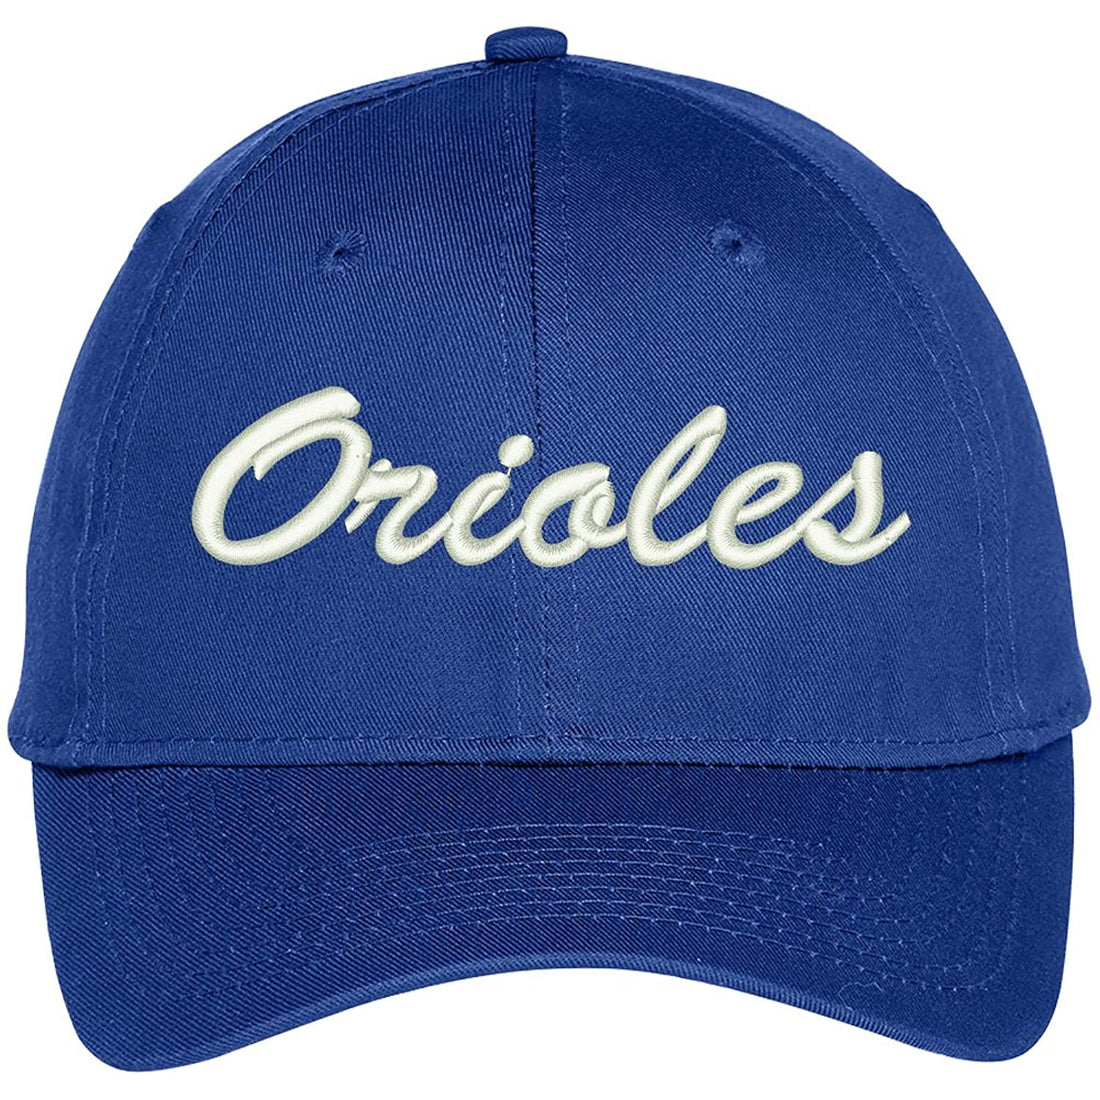 Trendy Apparel Shop Orioles Embroidered Precurved Adjustable Cap